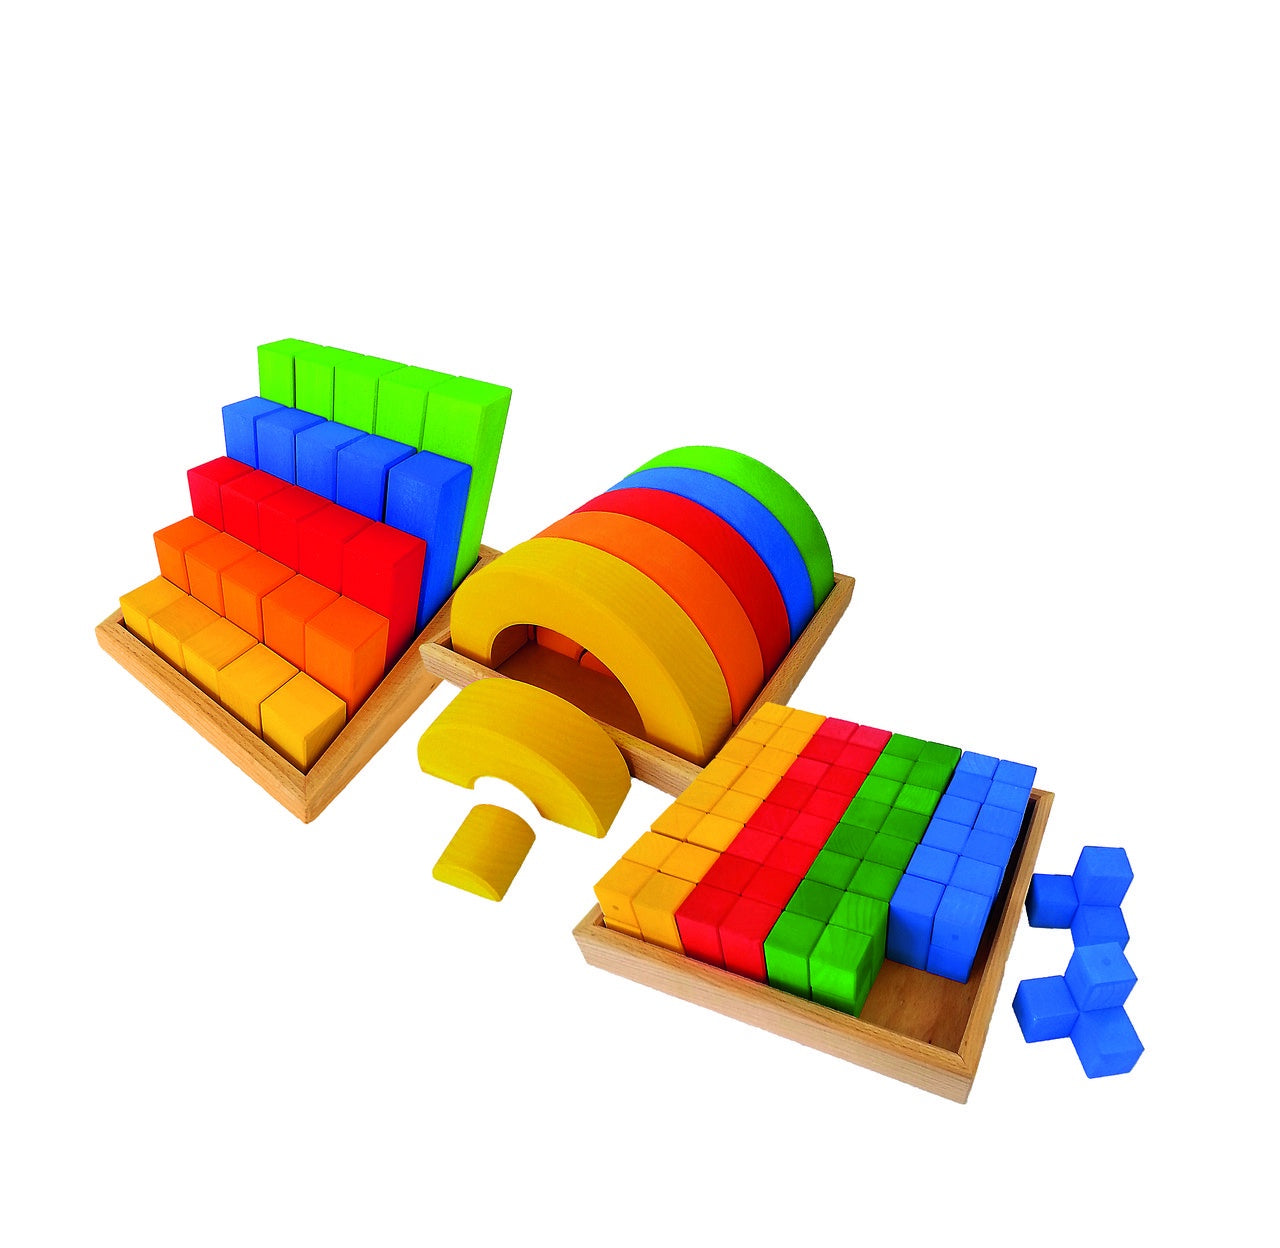 Bauspiel - Junior Building Set - 72 Piece - Wooden